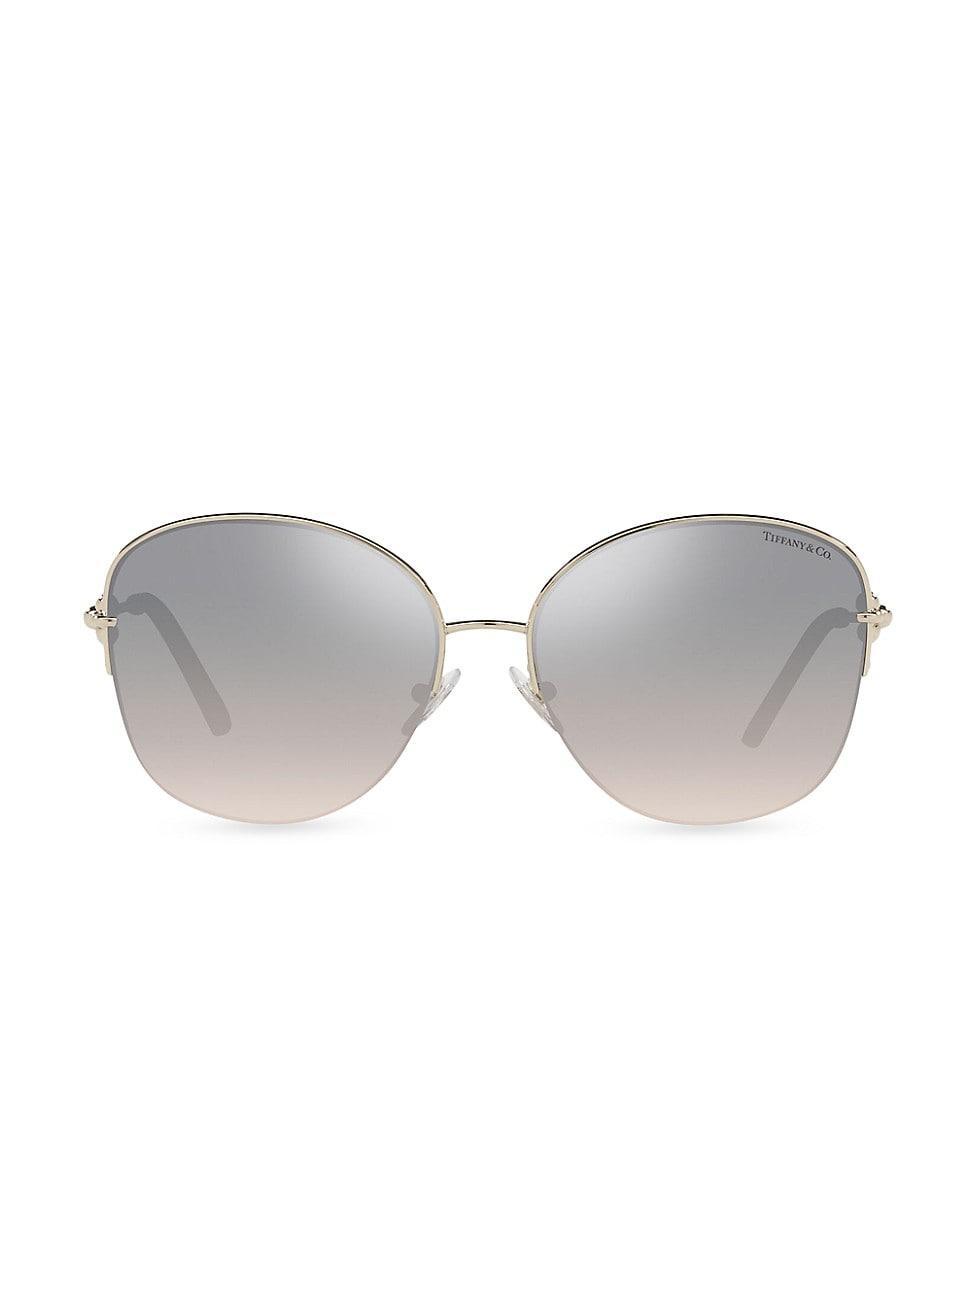 Tiffany & Co. Womens Sunglasses, TF3082 58 Product Image